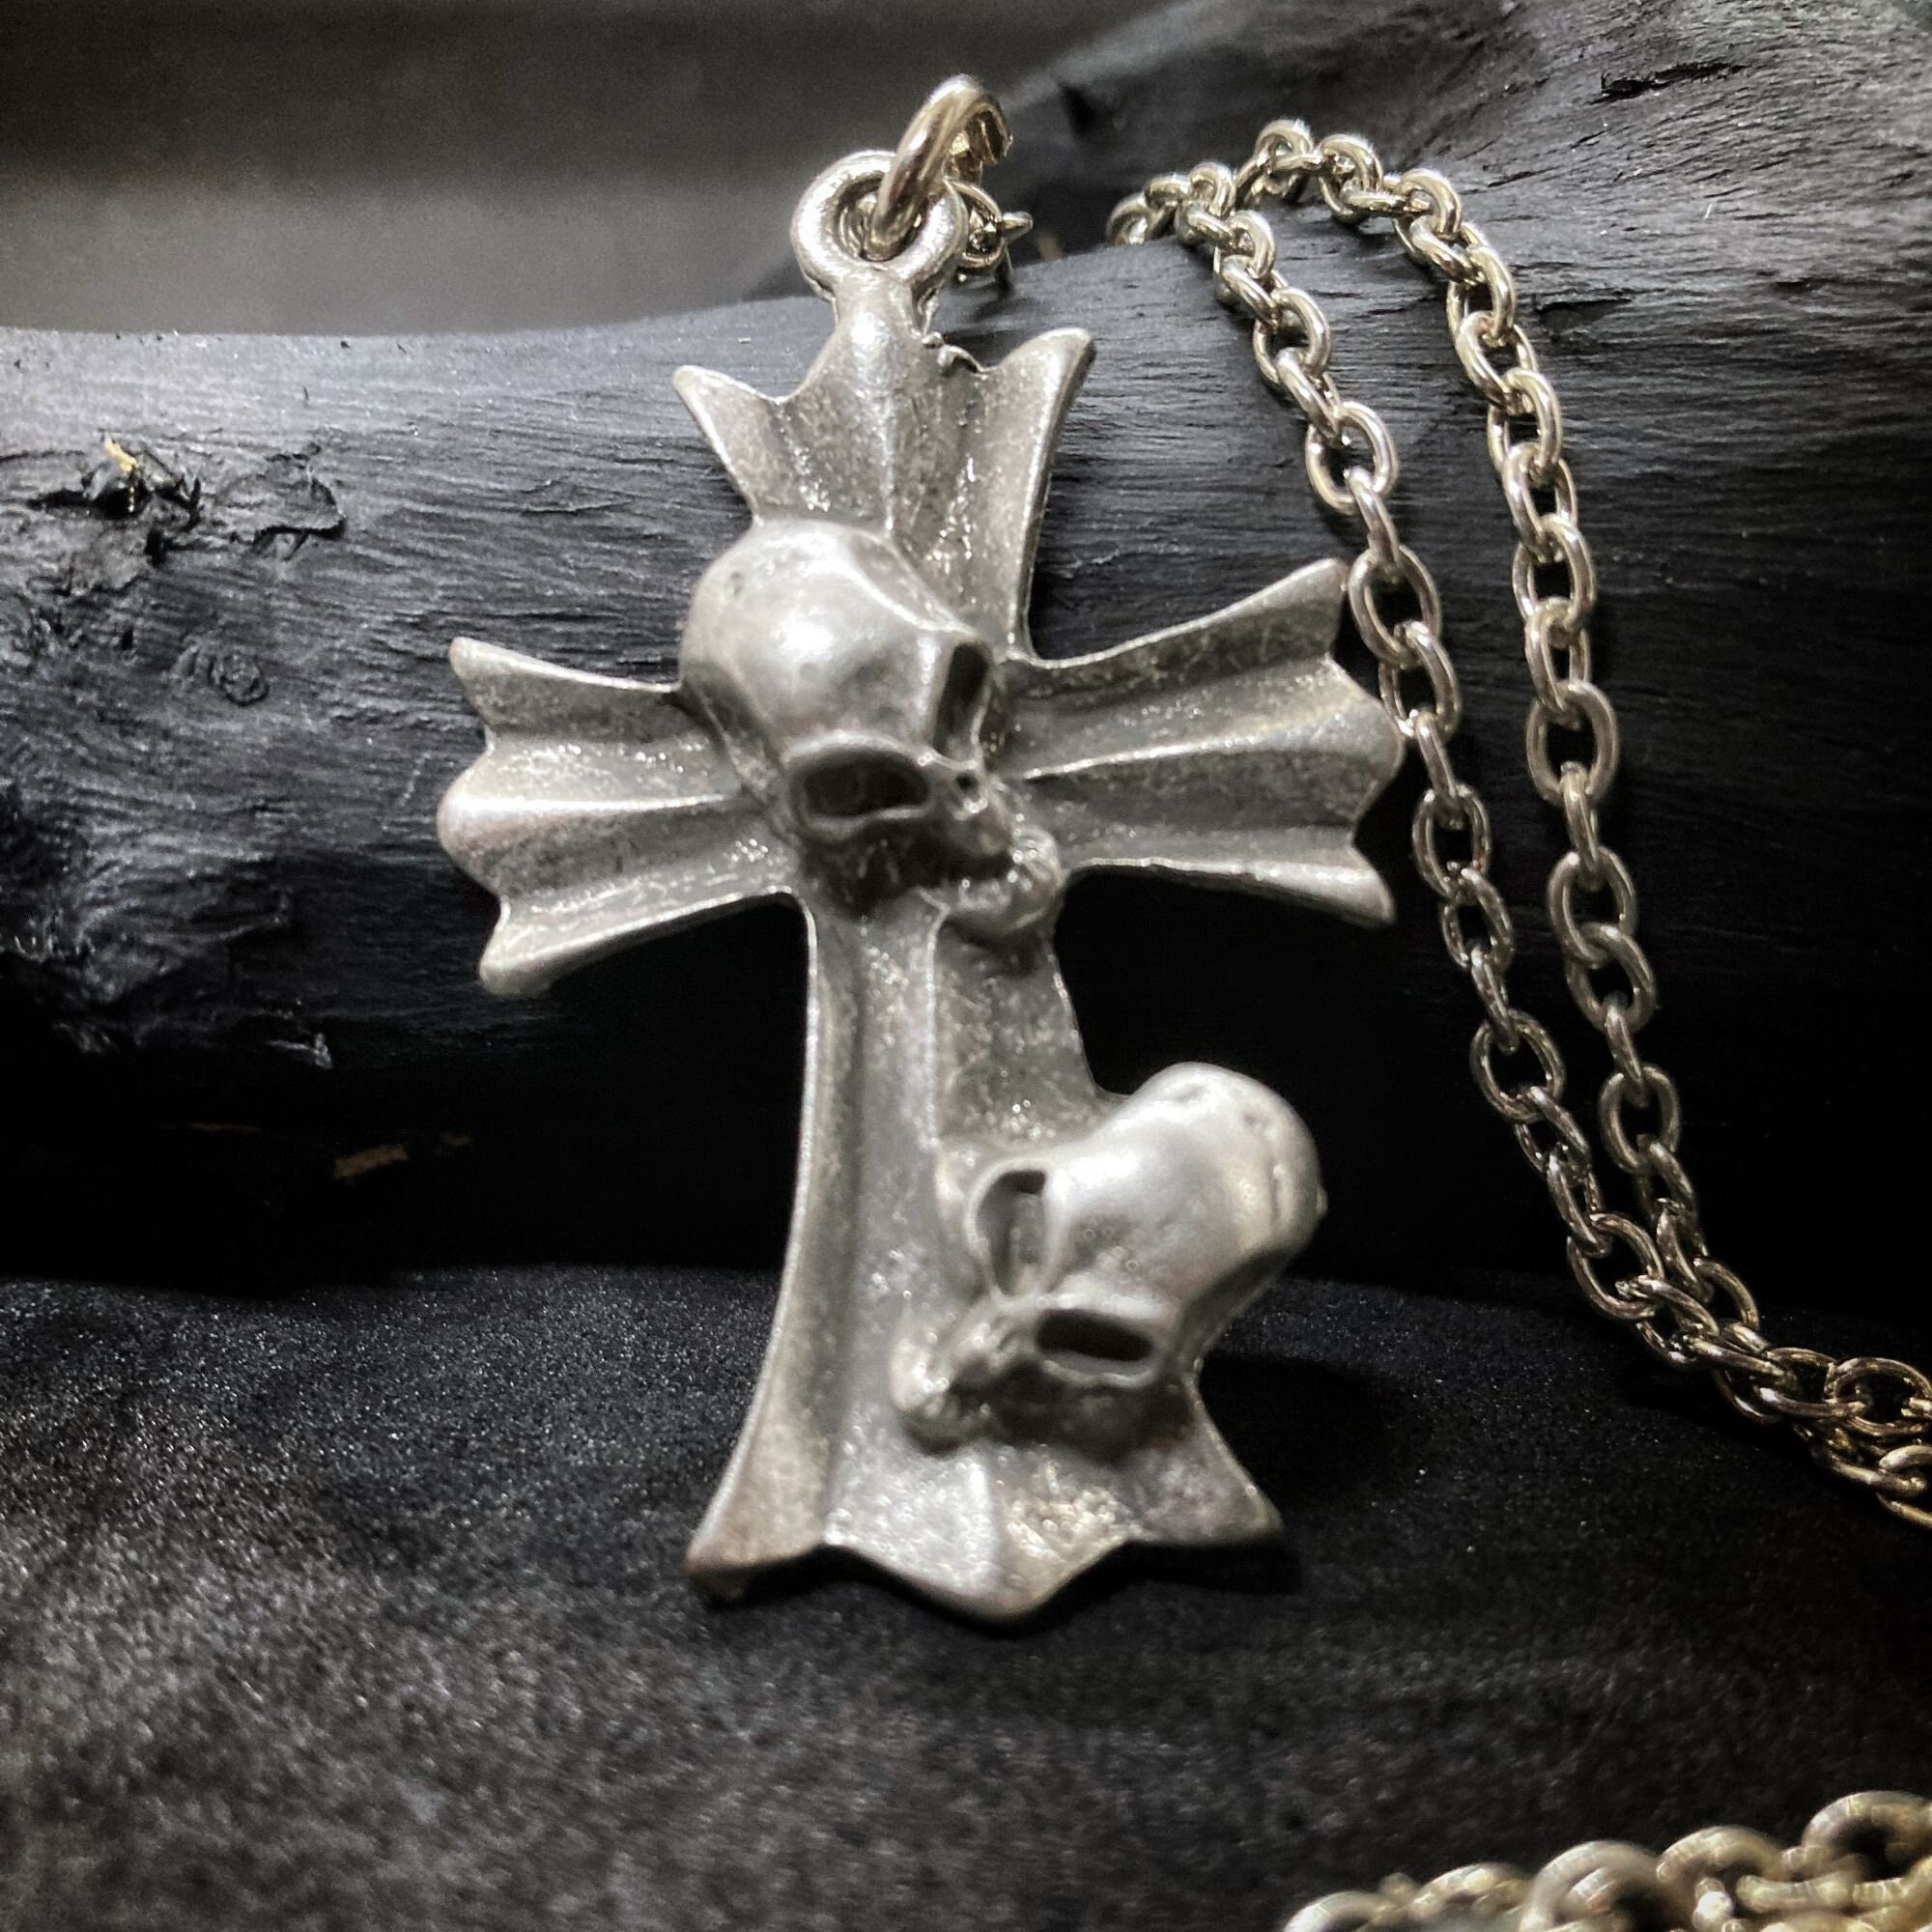 Kreuz mit Totenkopf Motiv Anhänger Death Cross Christian - .de